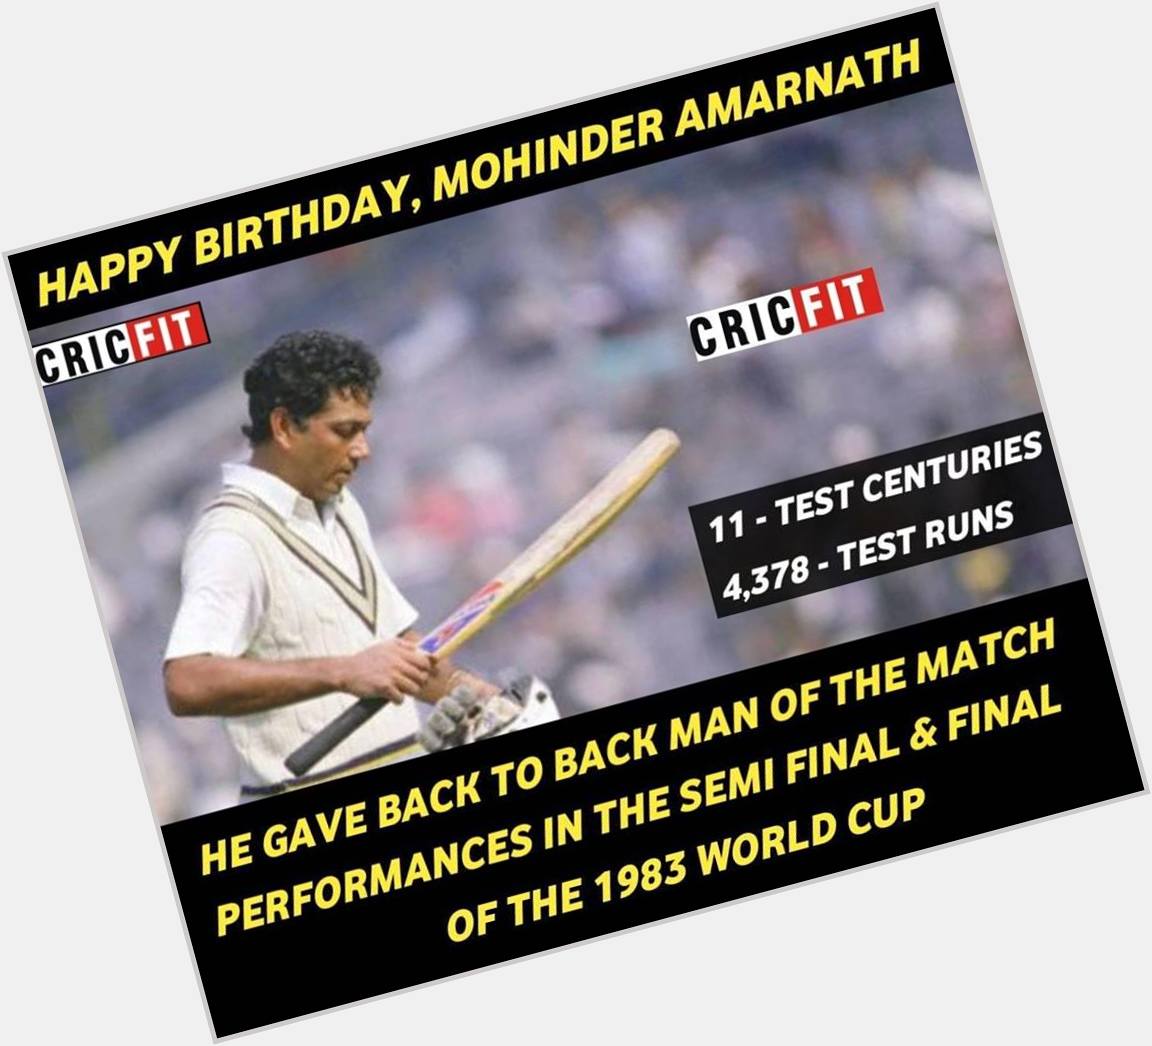 Happy Birthday Mohinder Amarnath! 